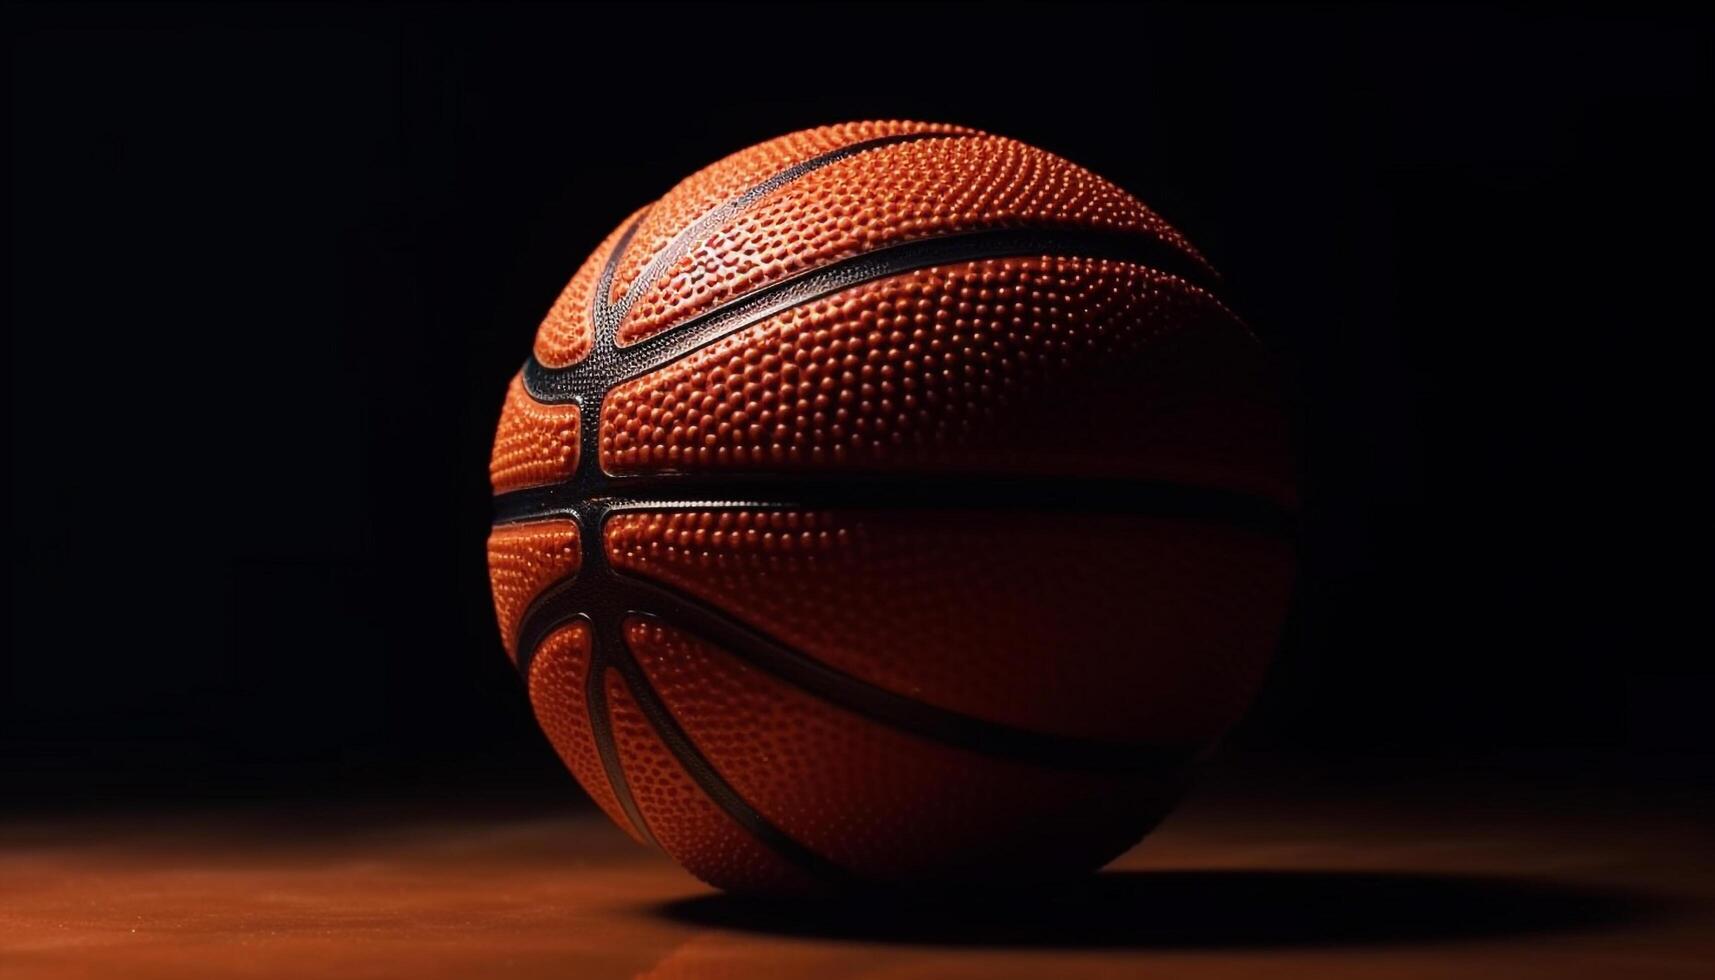 Orange basketball ball dribbling through black basketball hoop in studio generated by AI photo